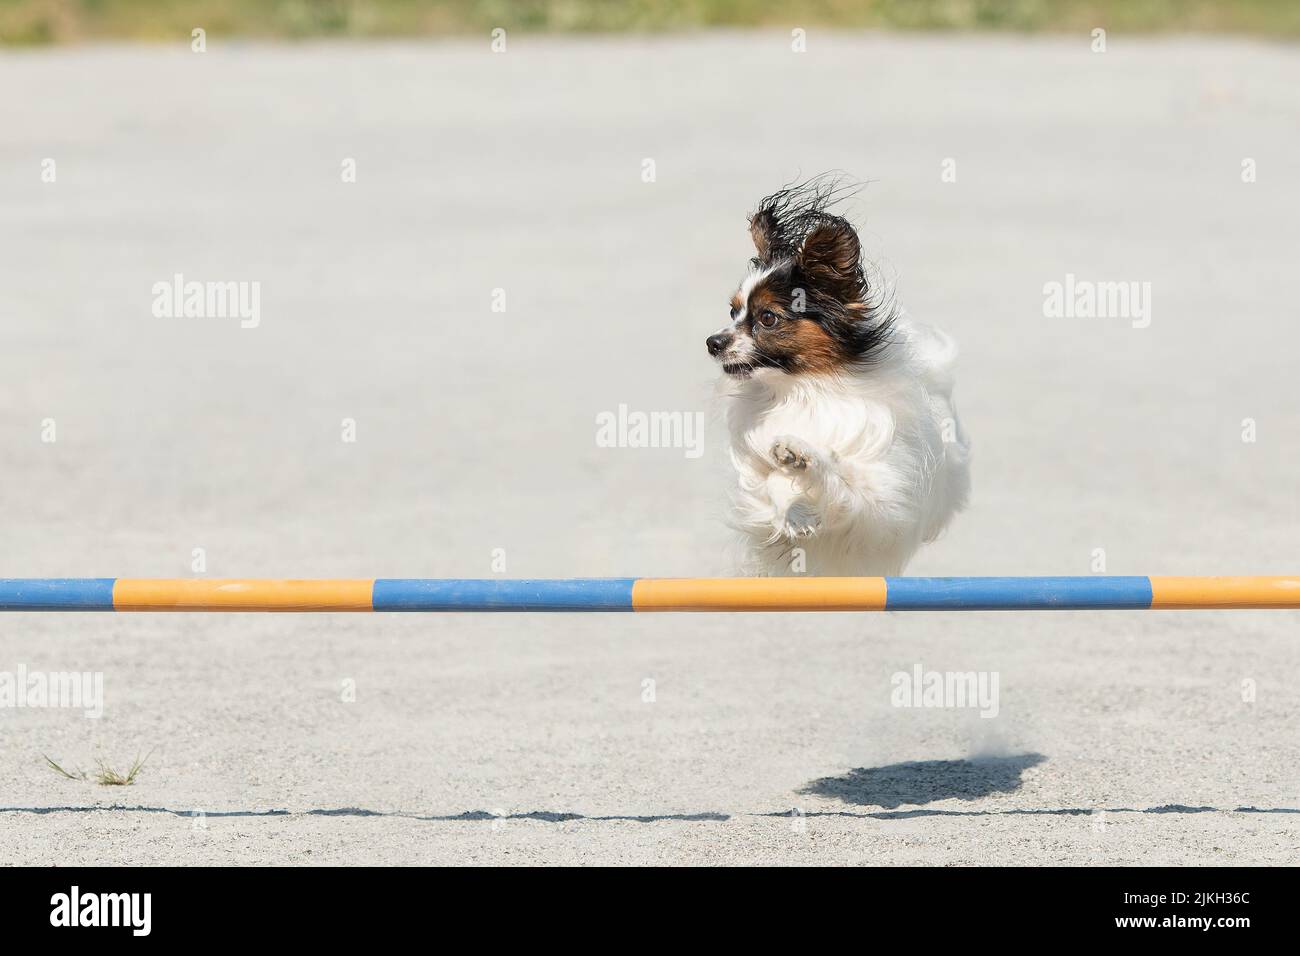 Papillon springt über eine Agility-Hürde auf einem Dog Agility Course Stockfoto